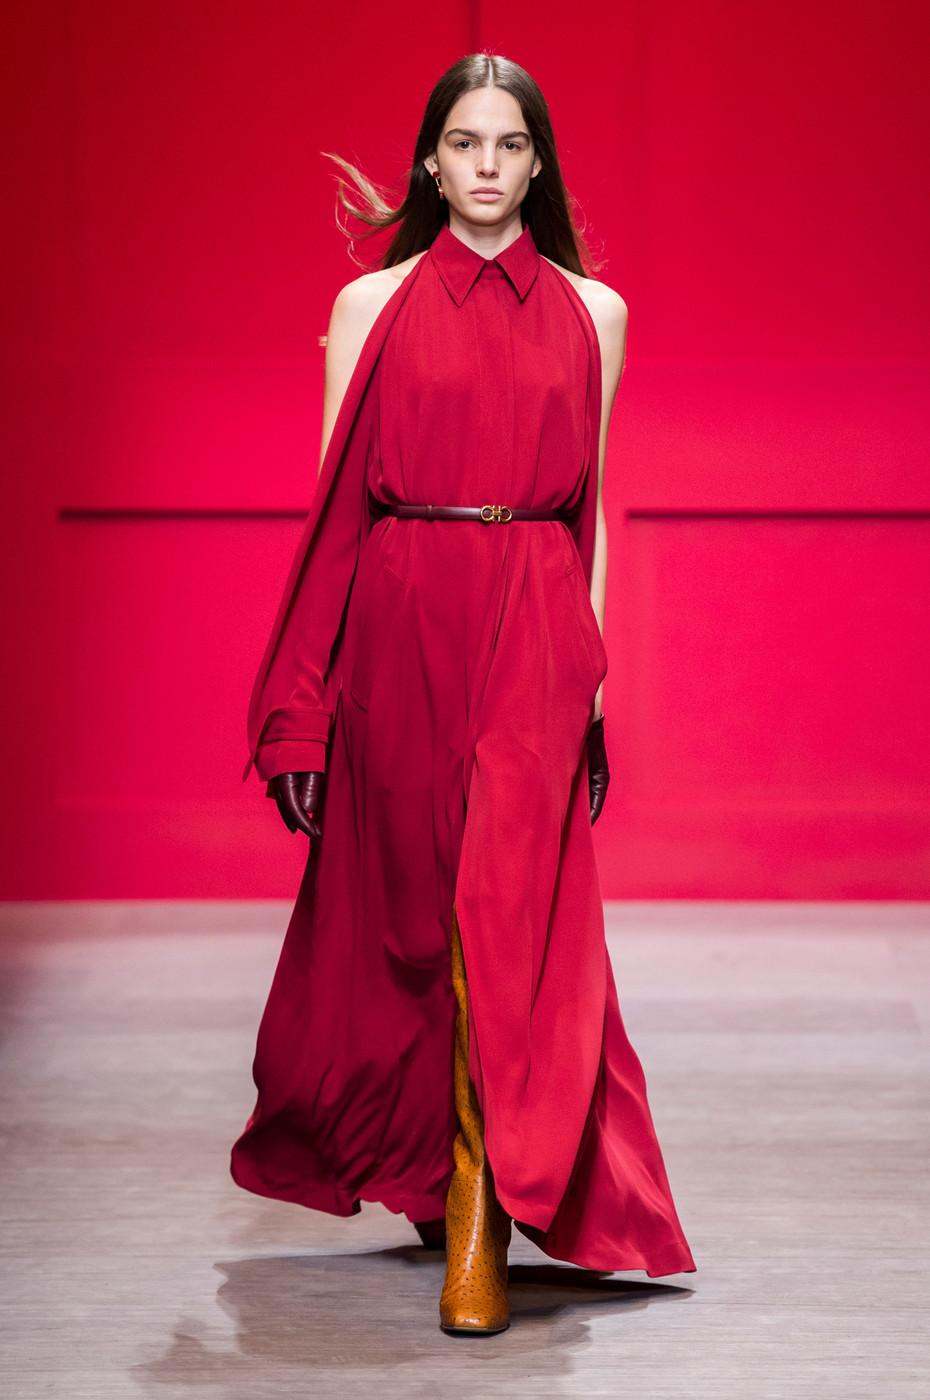 New Rare Salvatore Ferragamo Red Silk Dress F/W 2018  With Tags $3200 Sz 38 7